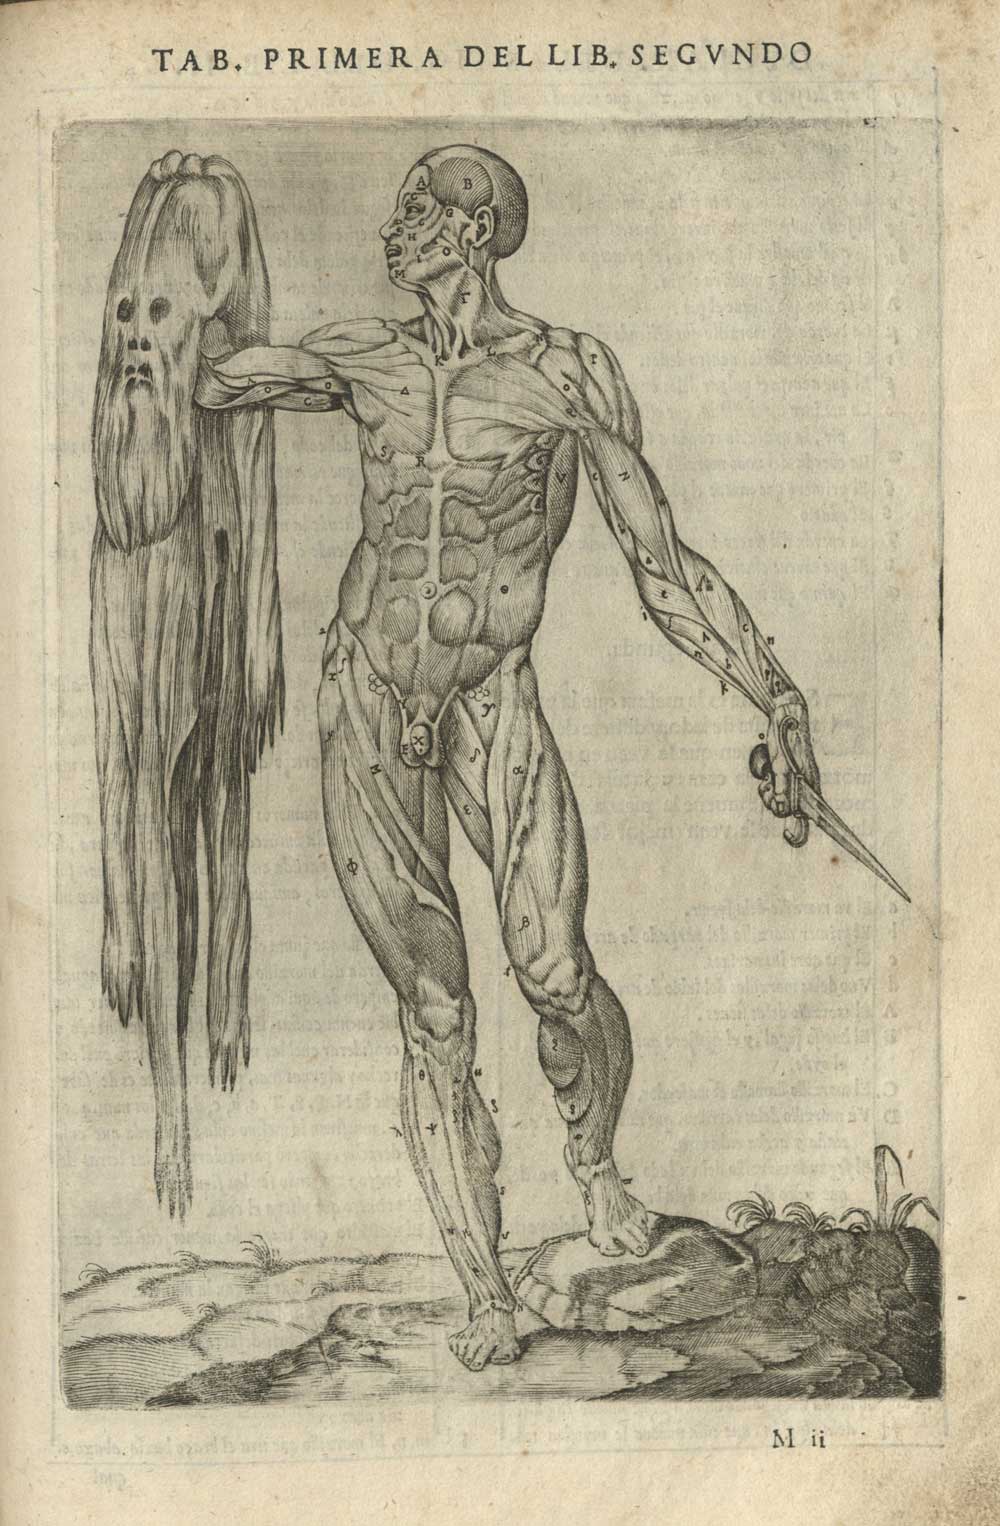 Juan de Valverde and his anatomical atlas